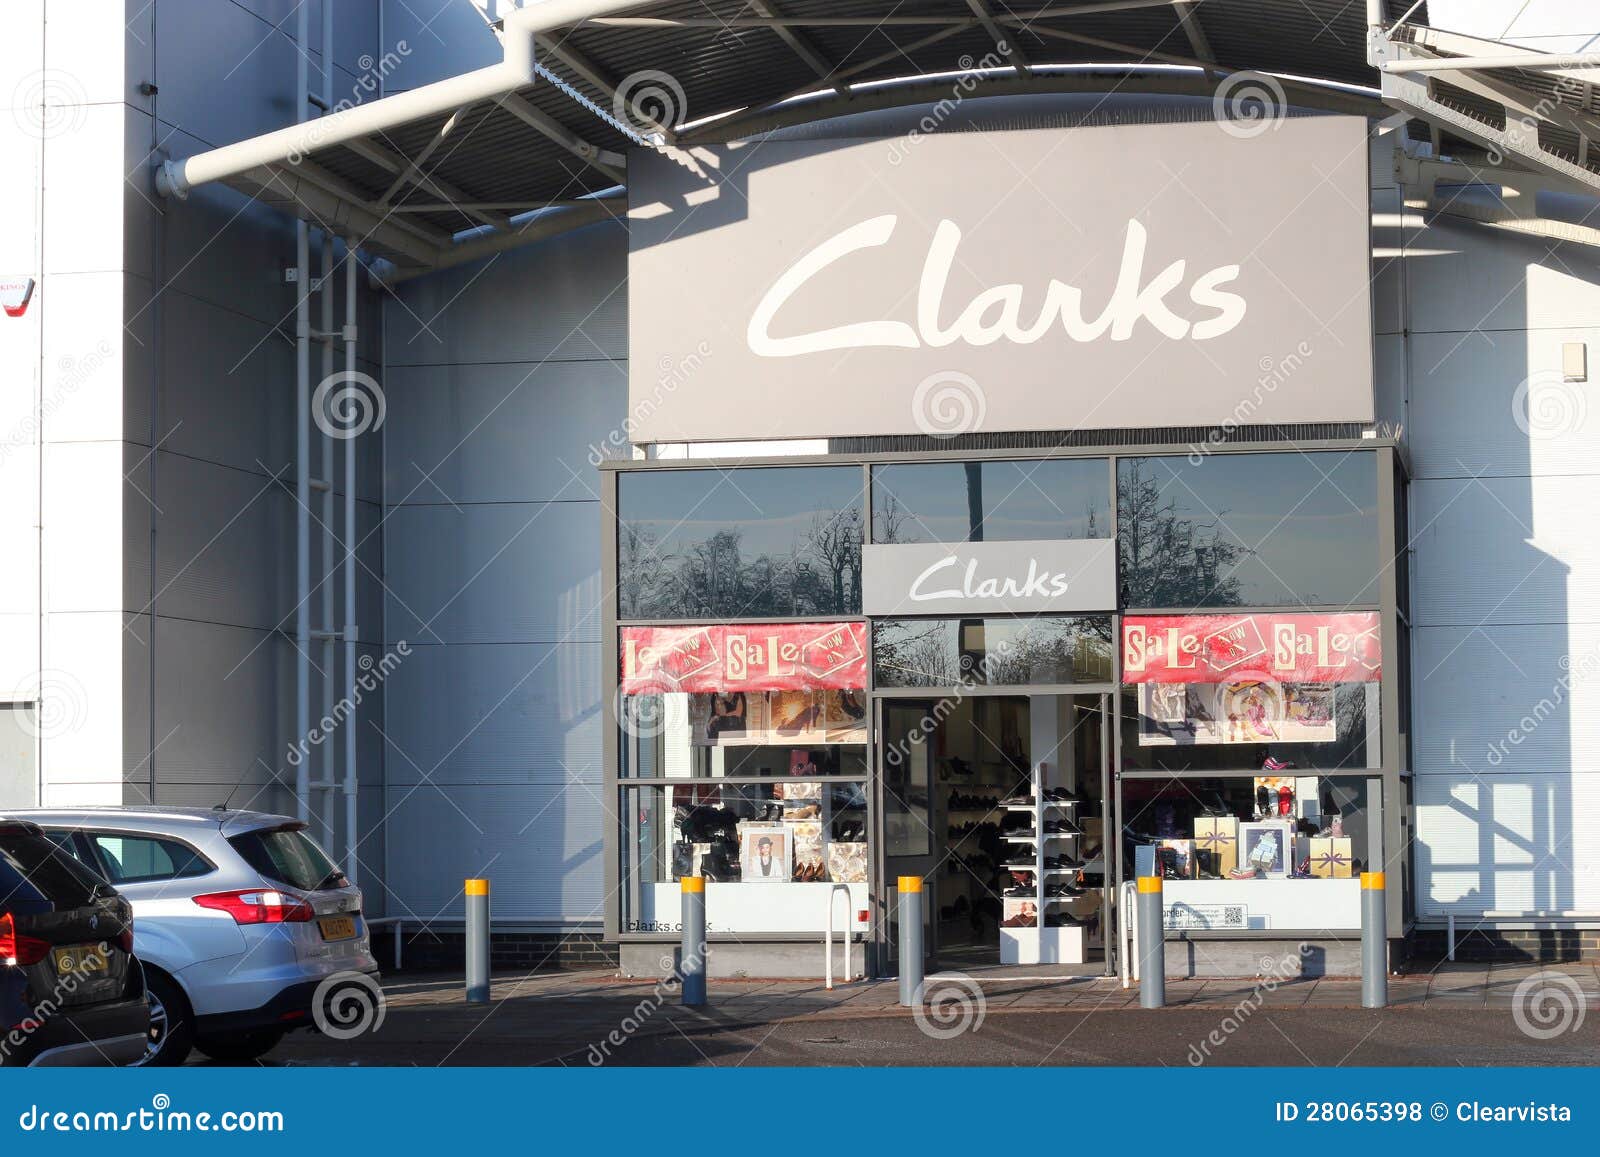 closest clarks shoe store